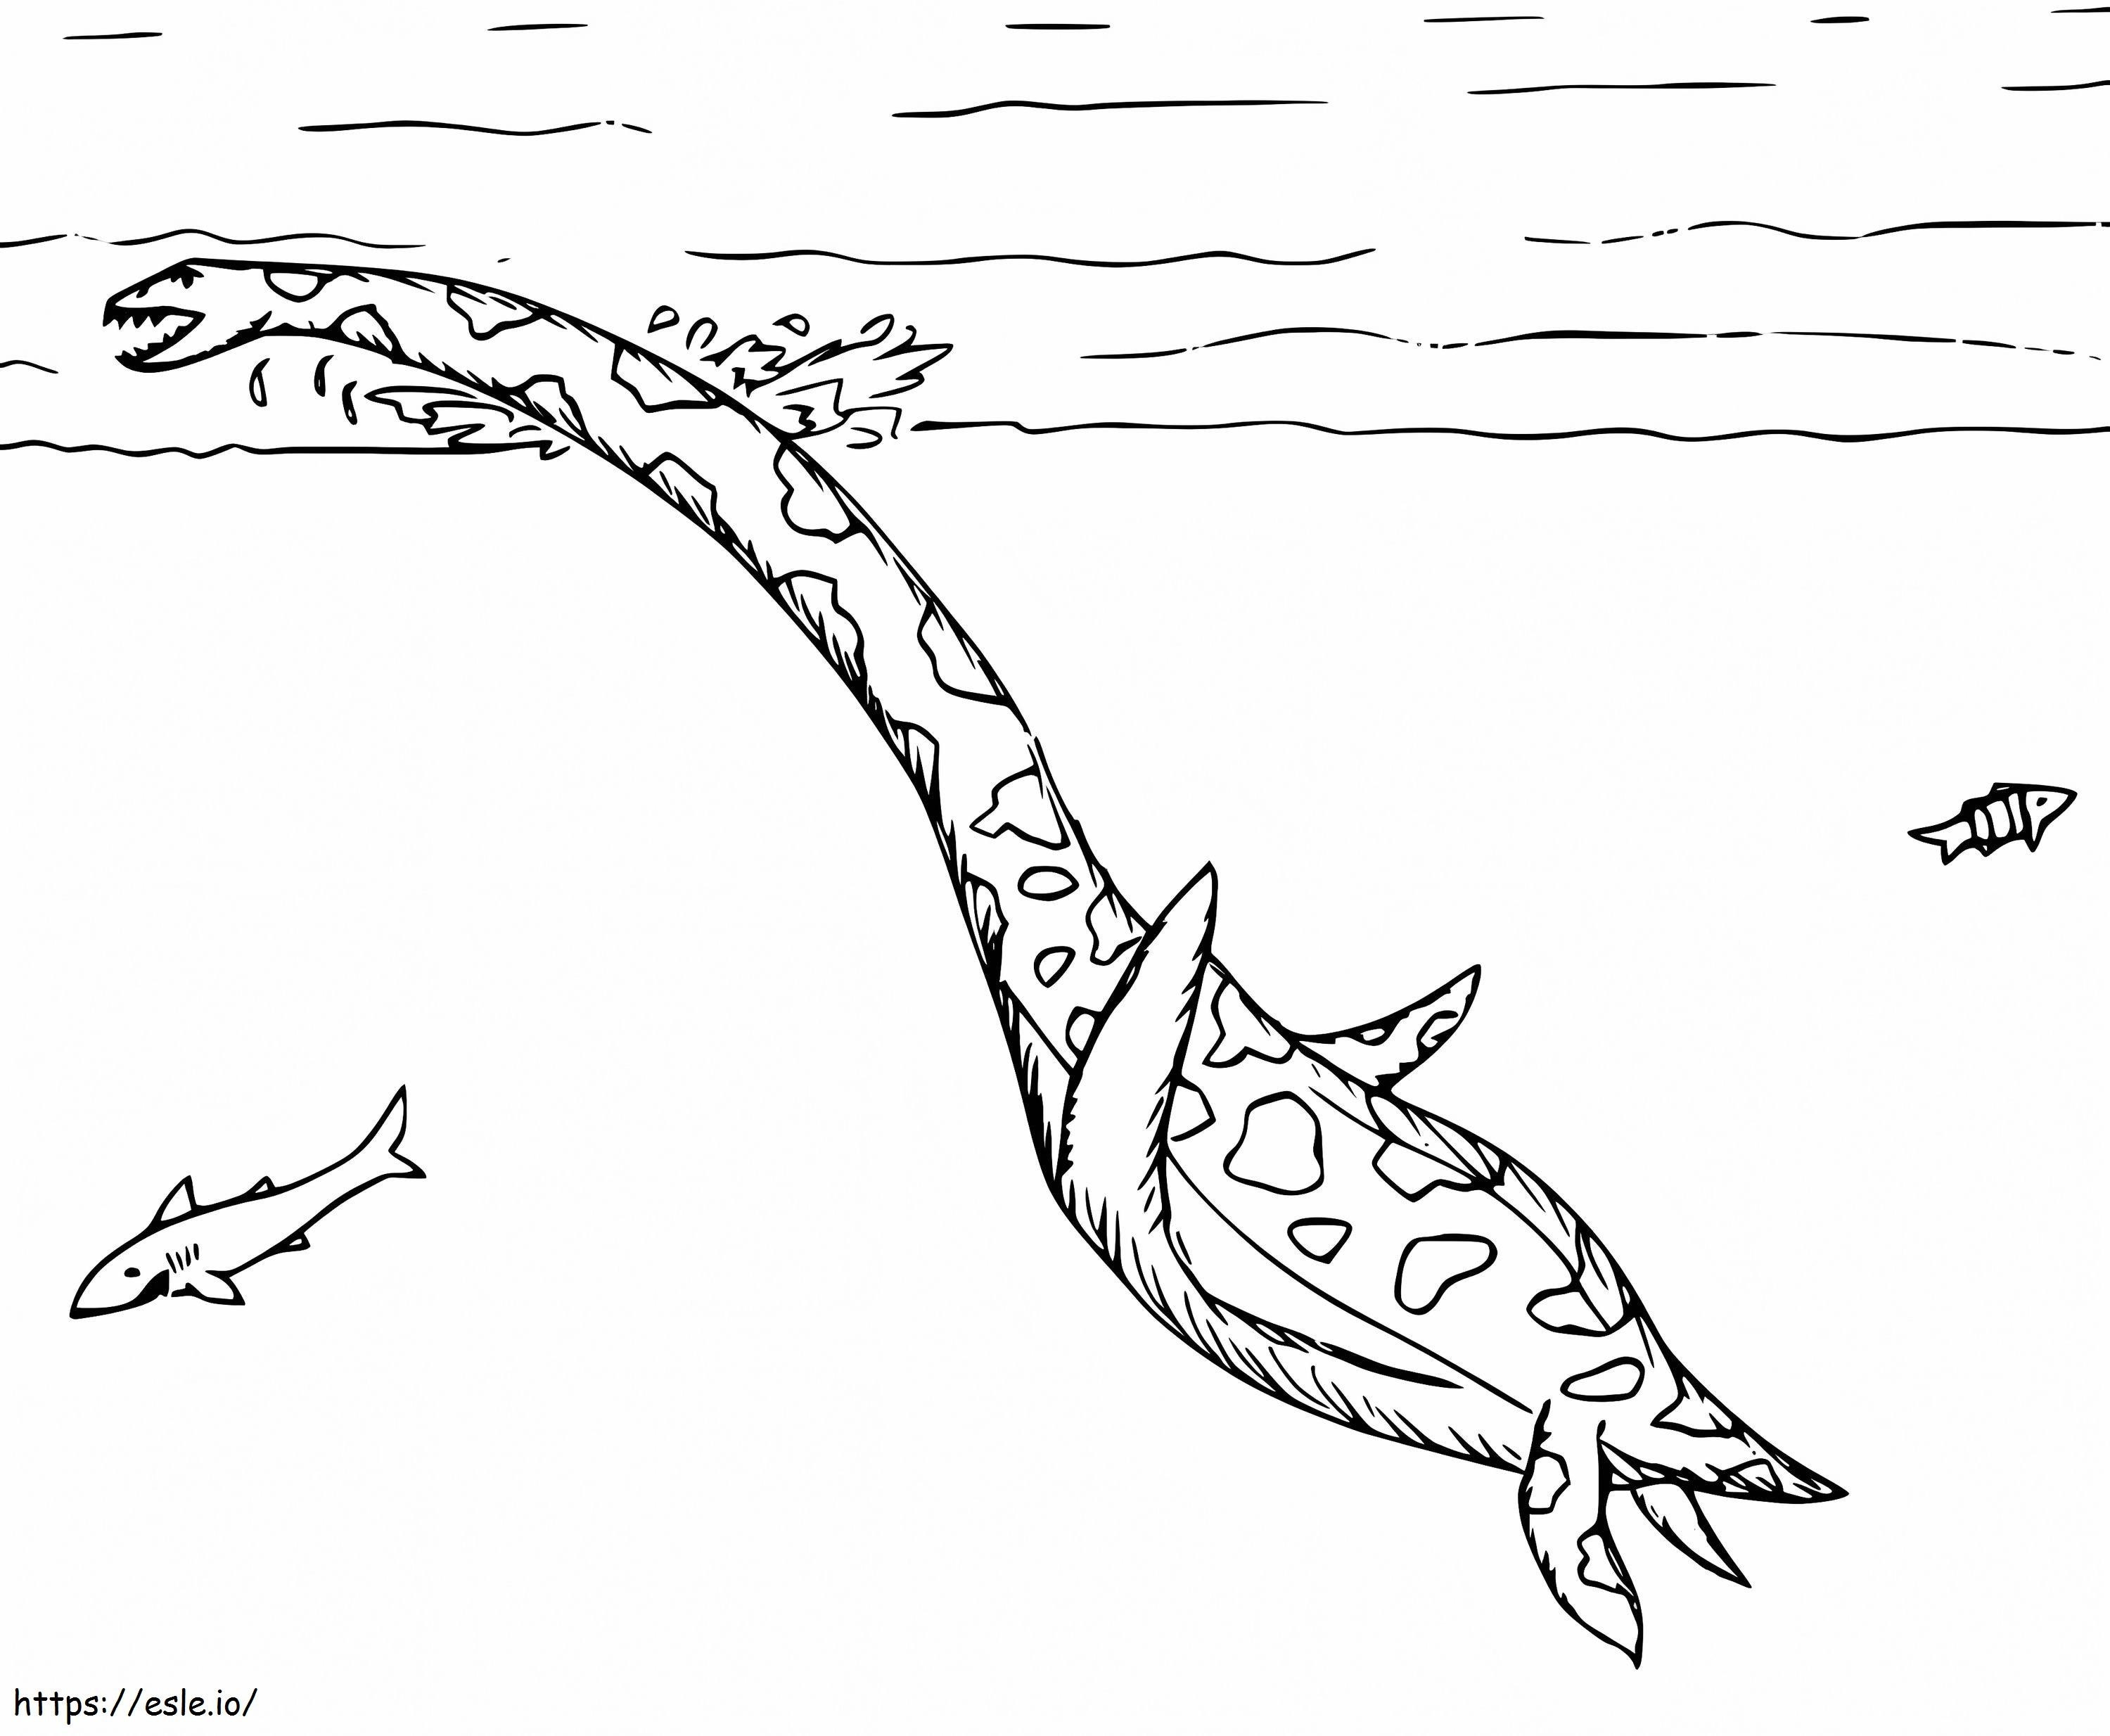 Plesiosaurus Swims coloring page